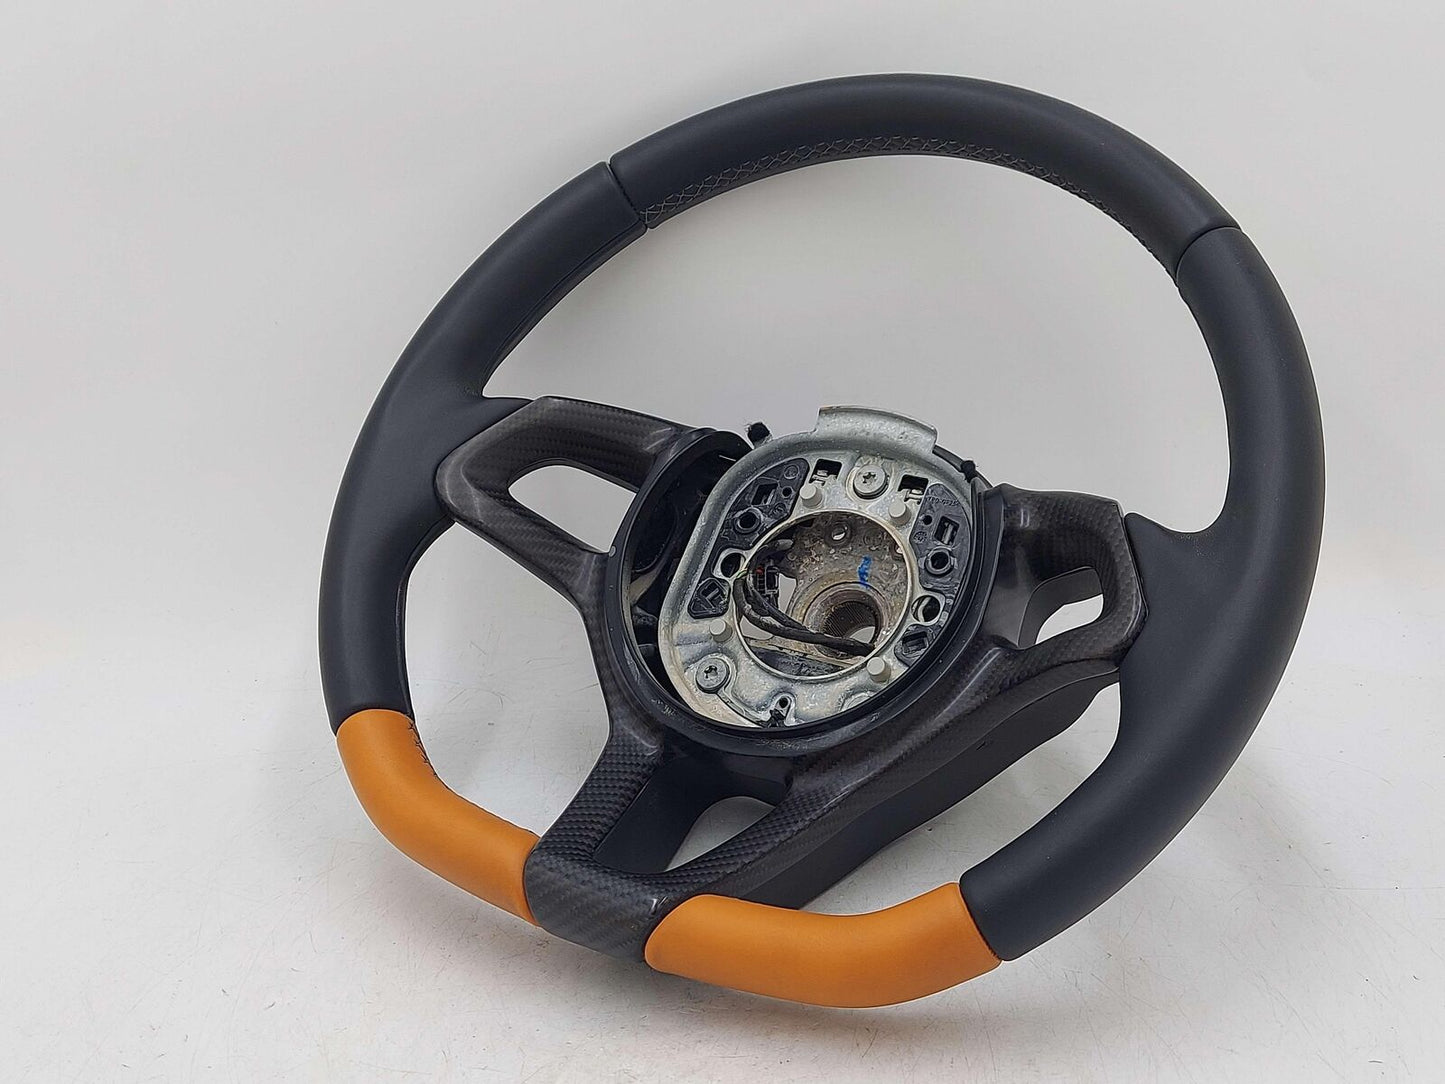 2018 Mclaren 570s Steering Wheel Carbon Fiber Black/Orange 8K KMS